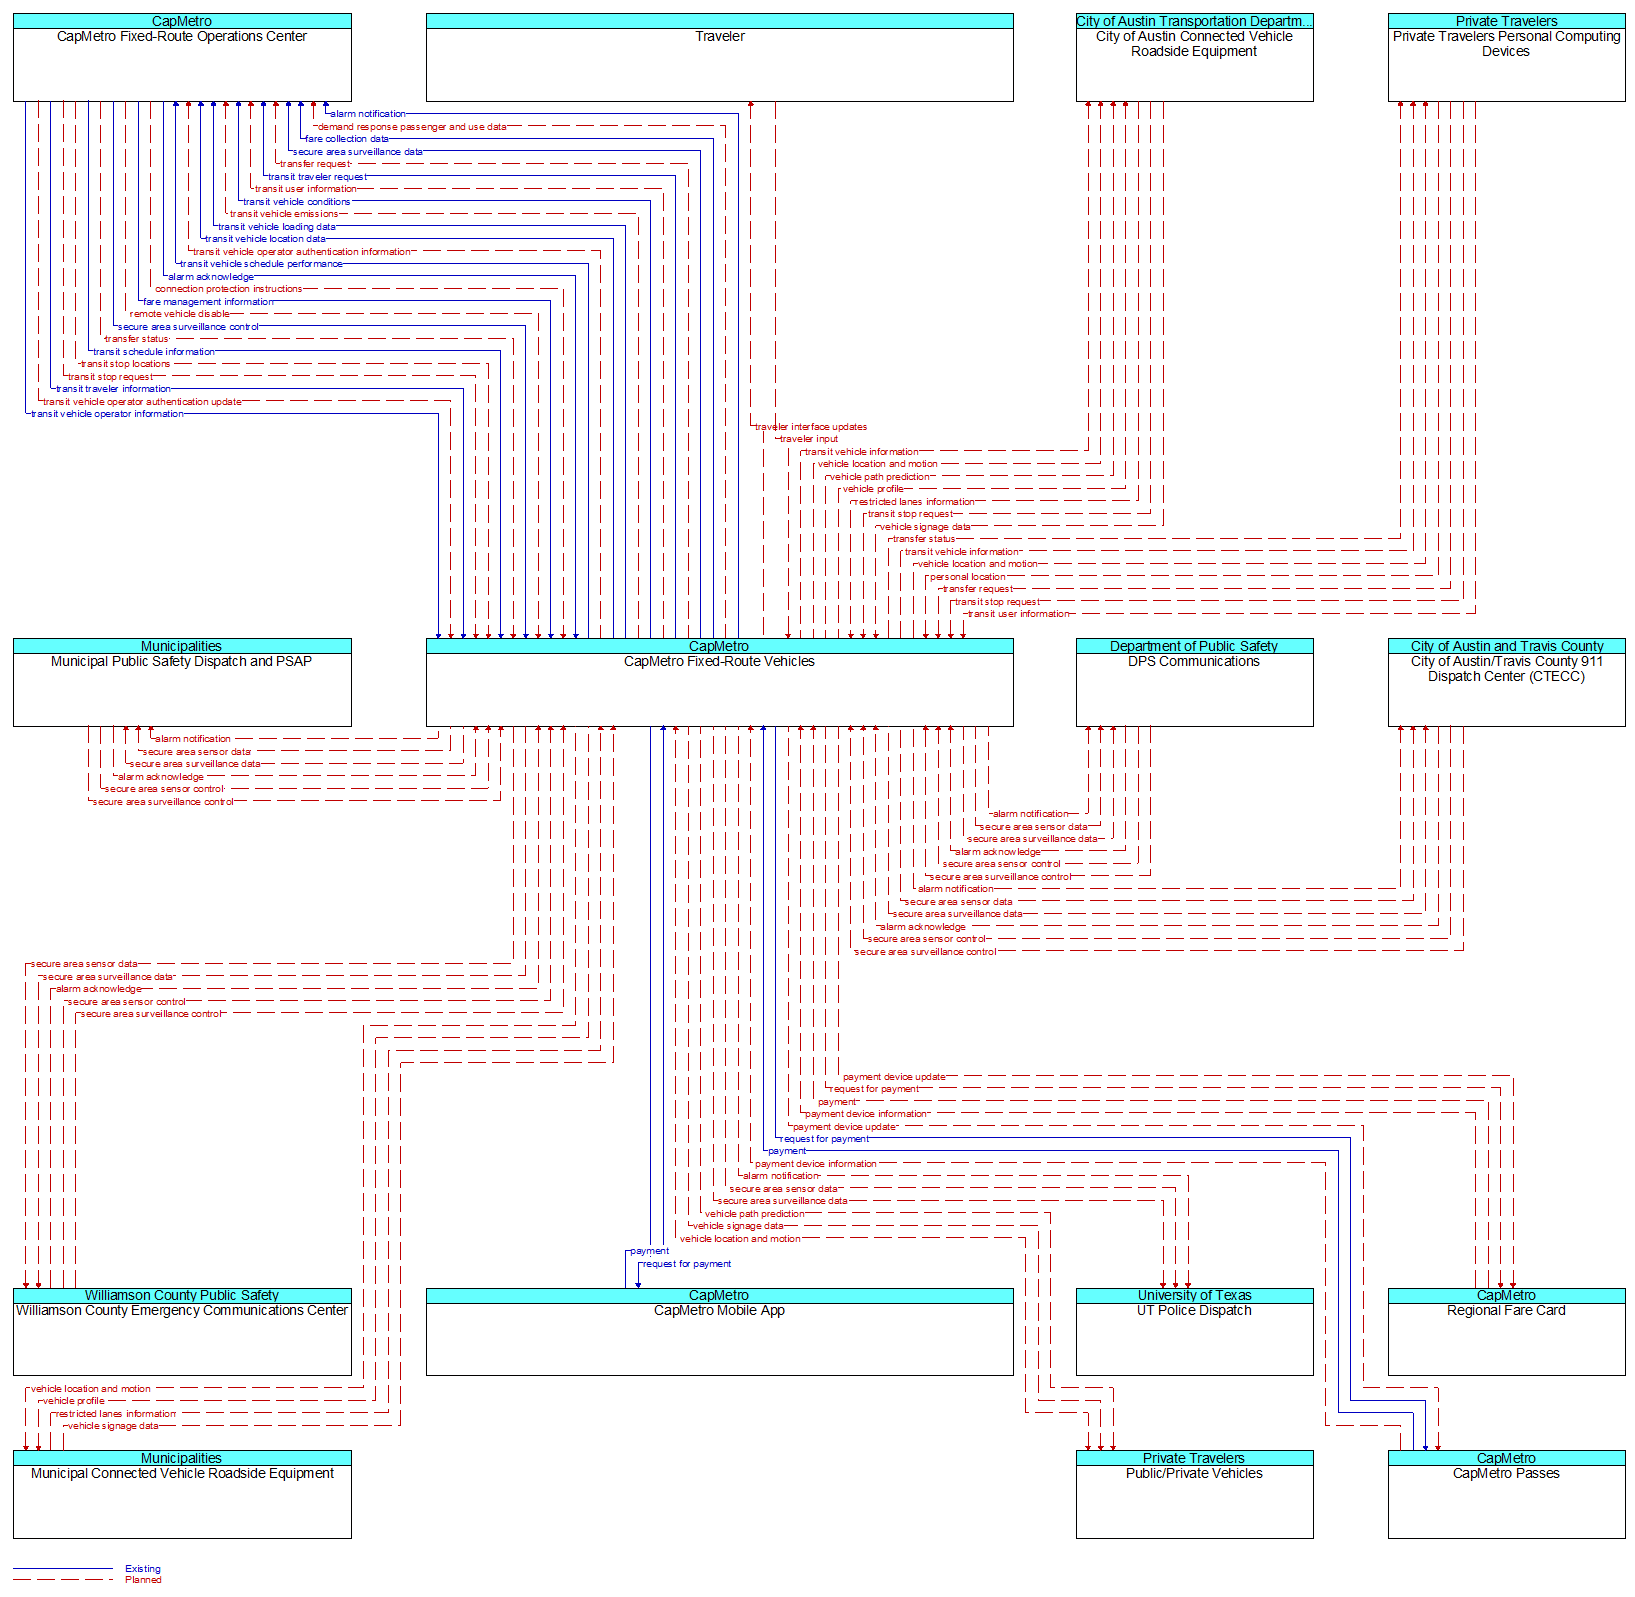 Context Diagram - CapMetro Fixed-Route Vehicles